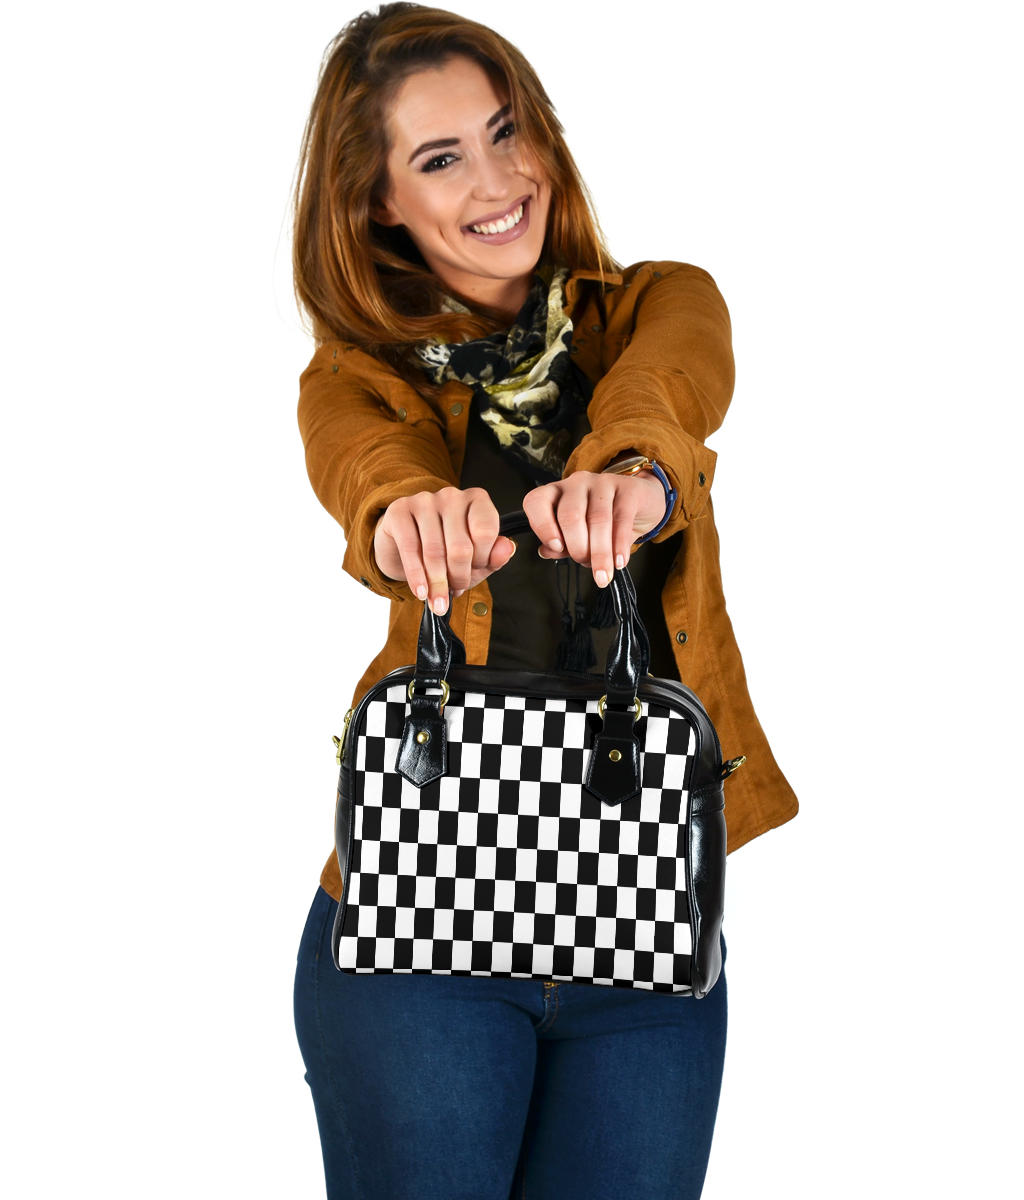 Racing Checkered Shoulder Handbag!